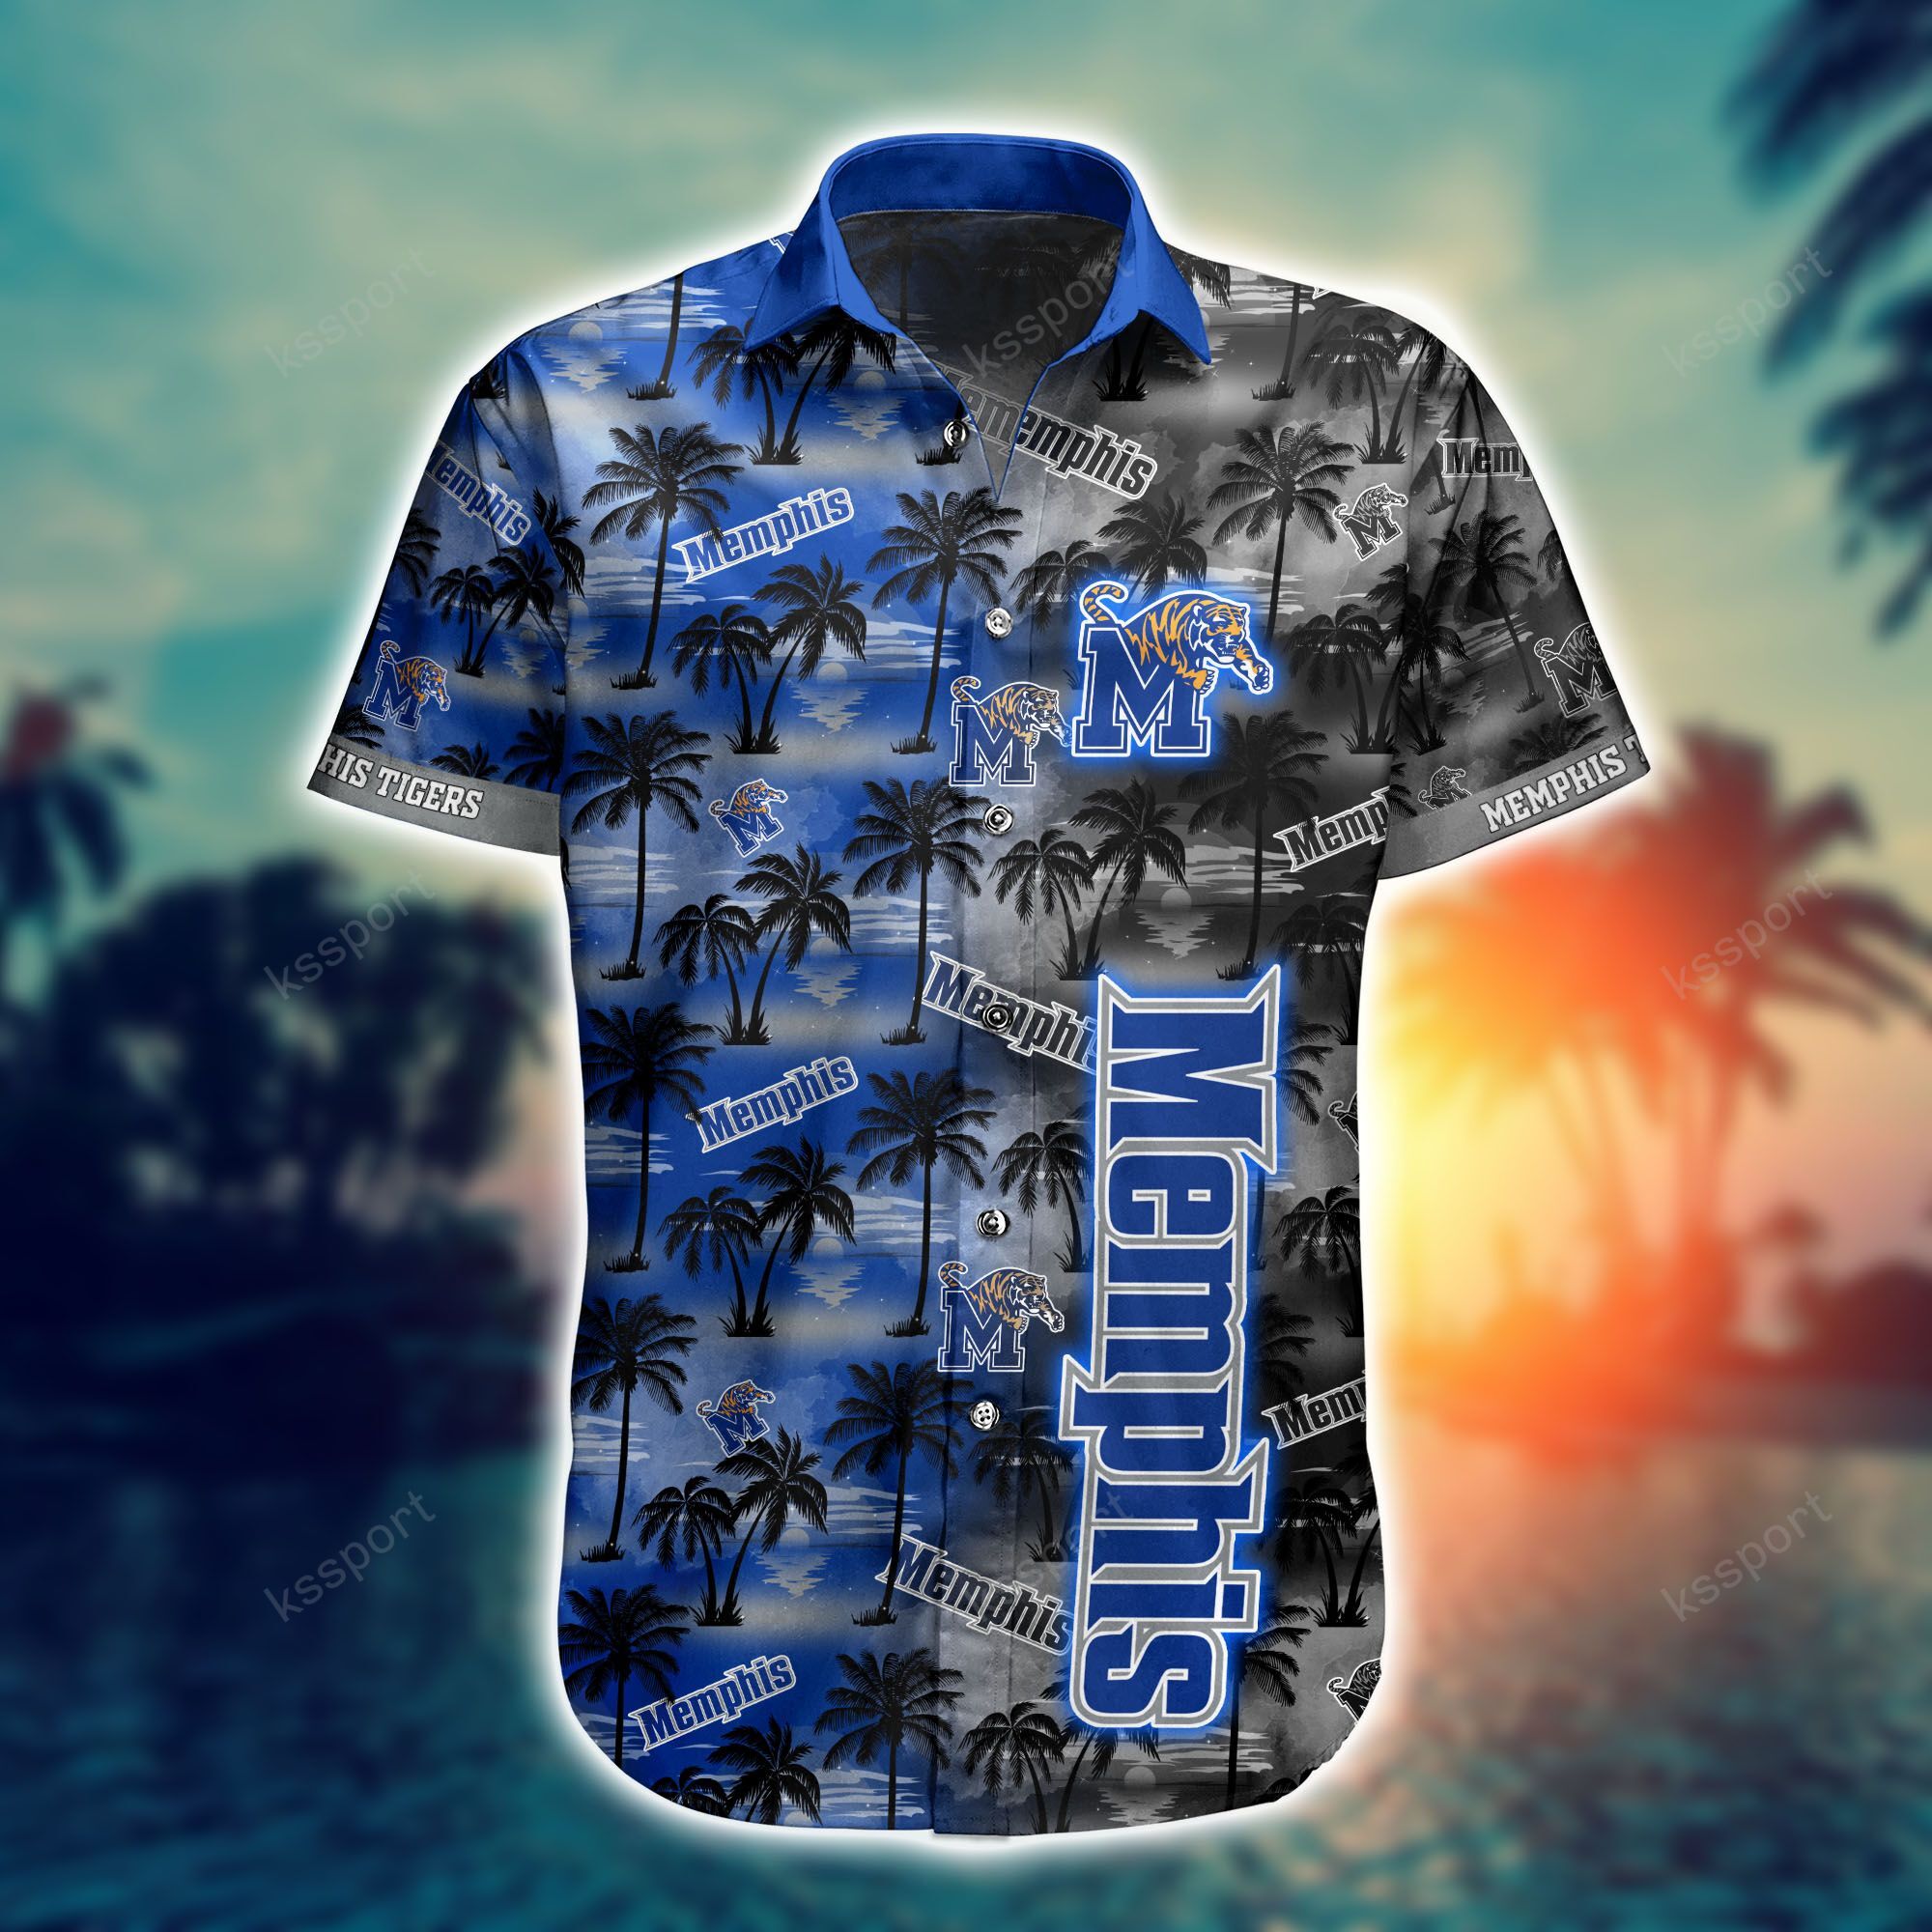 Hawaiian shirt and shorts is a great way to look stylish at a beach party 75